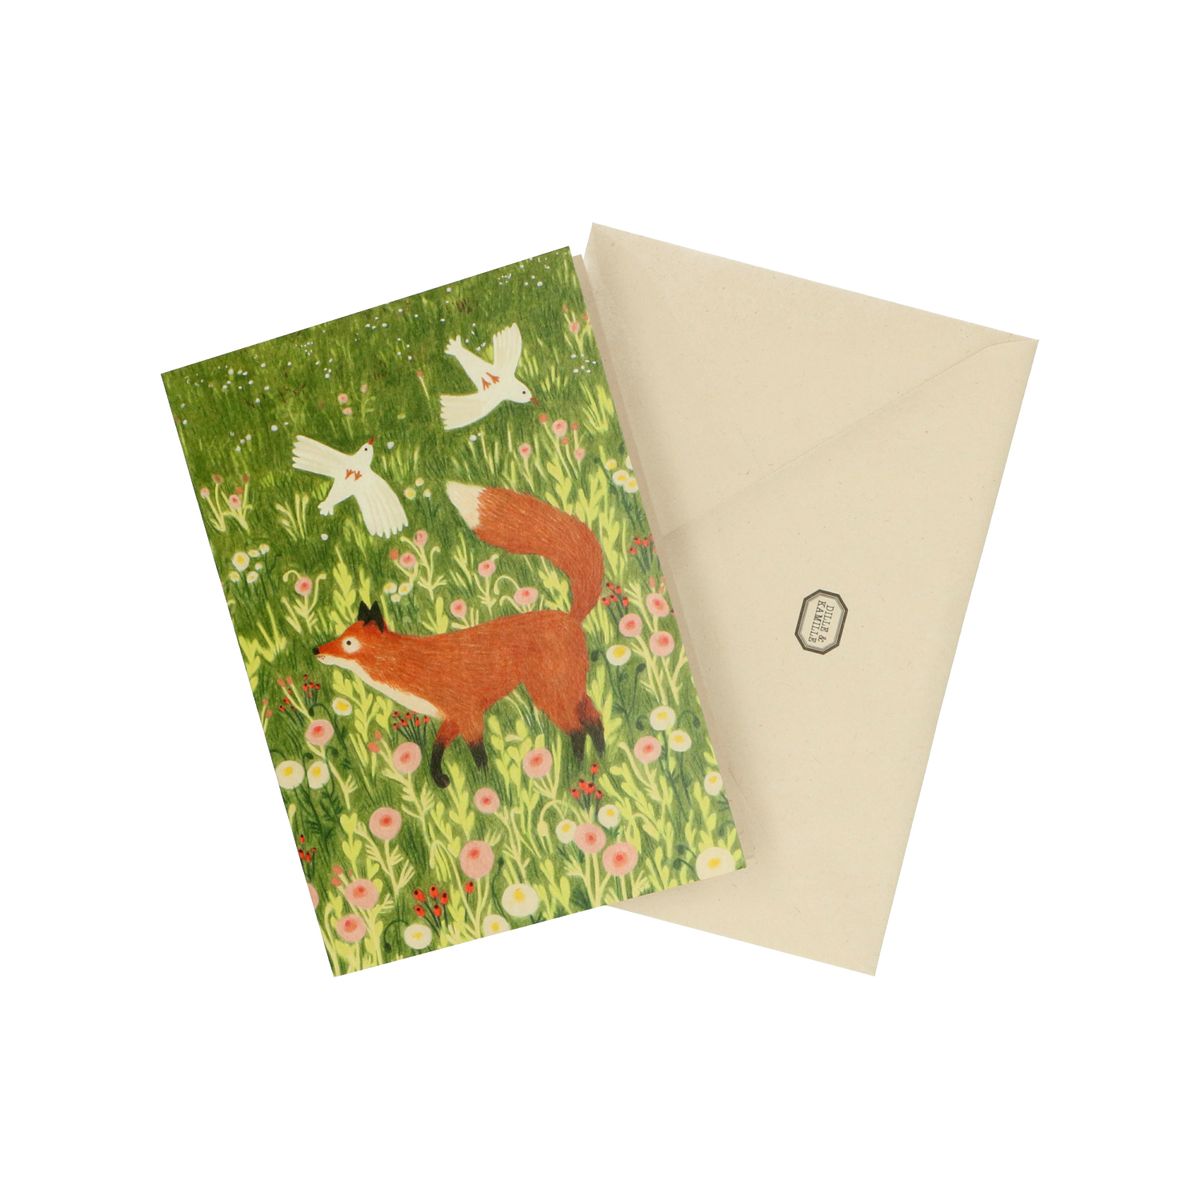 Carte postale Renards + enveloppe